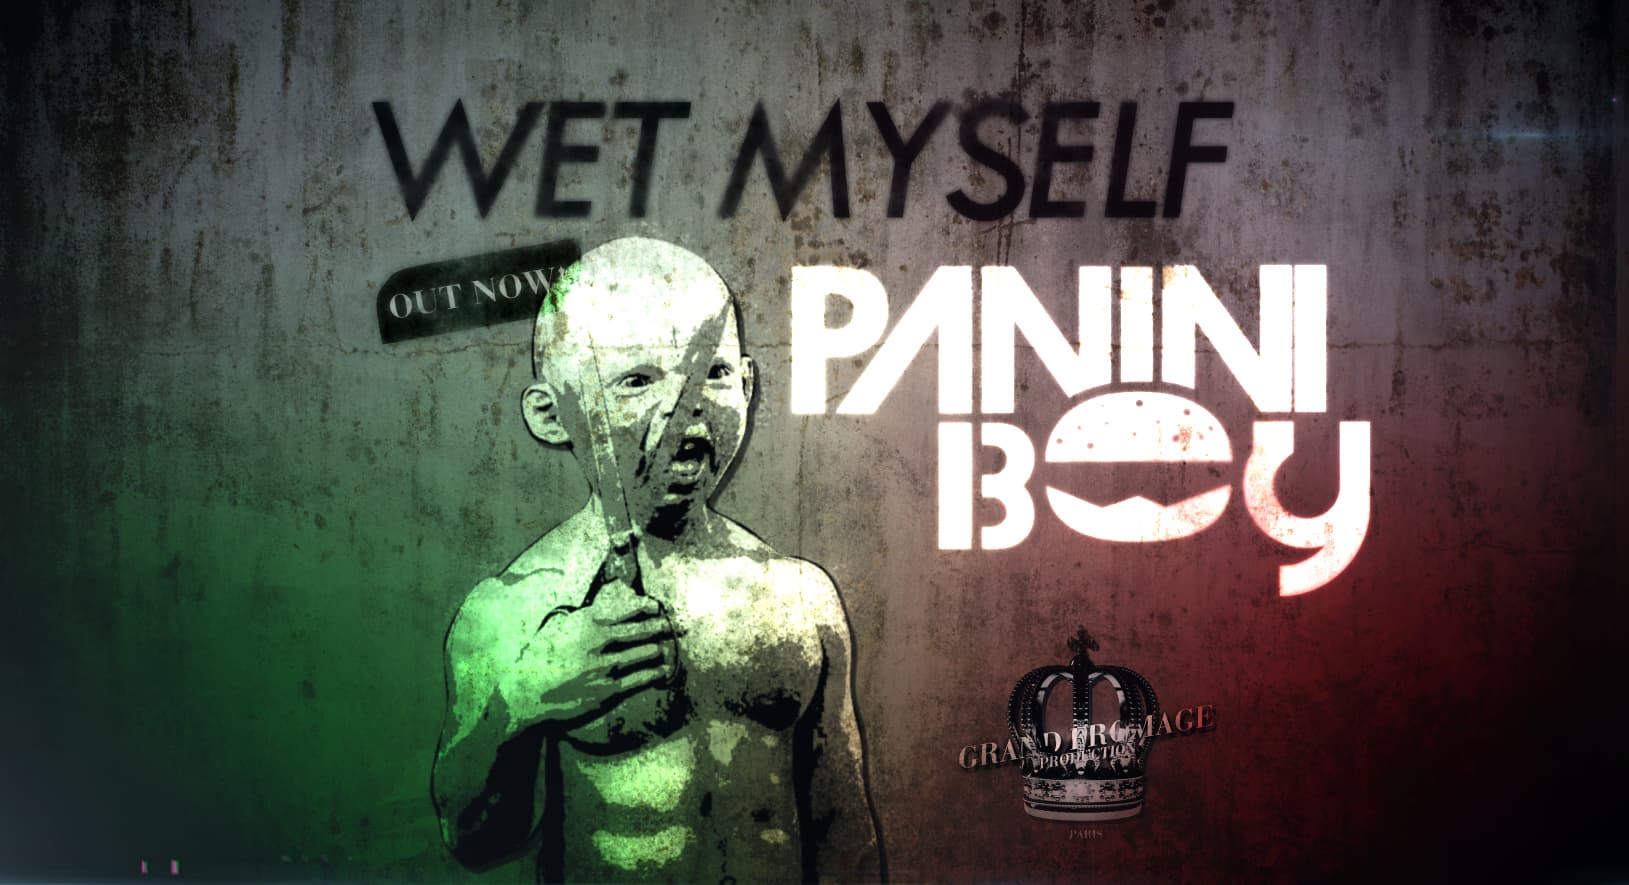 Panini Boy - Wet Myself